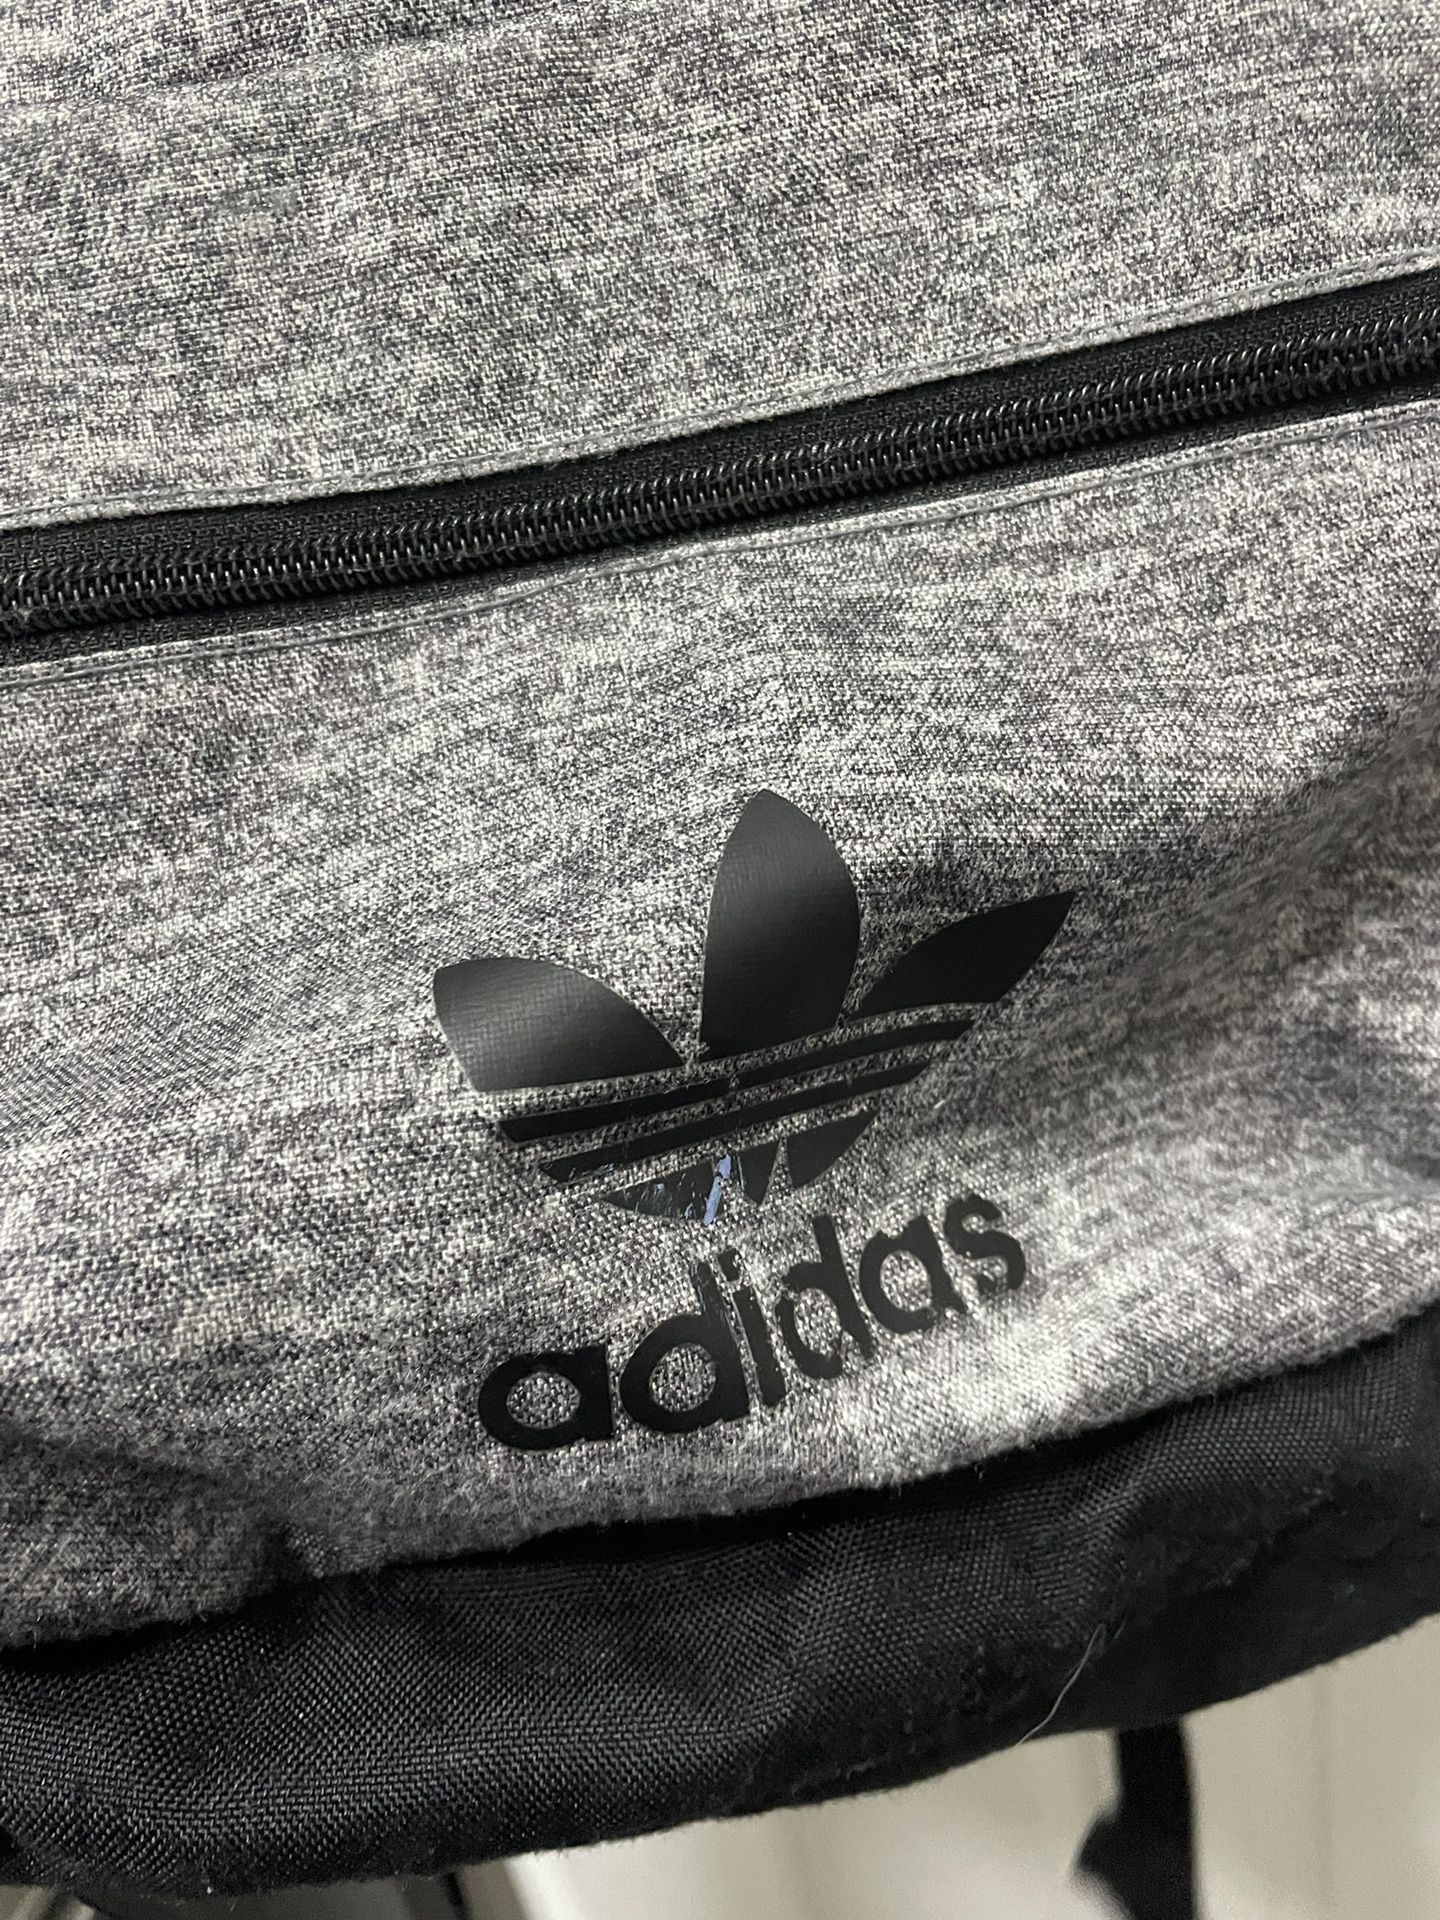 Adidas back pack  